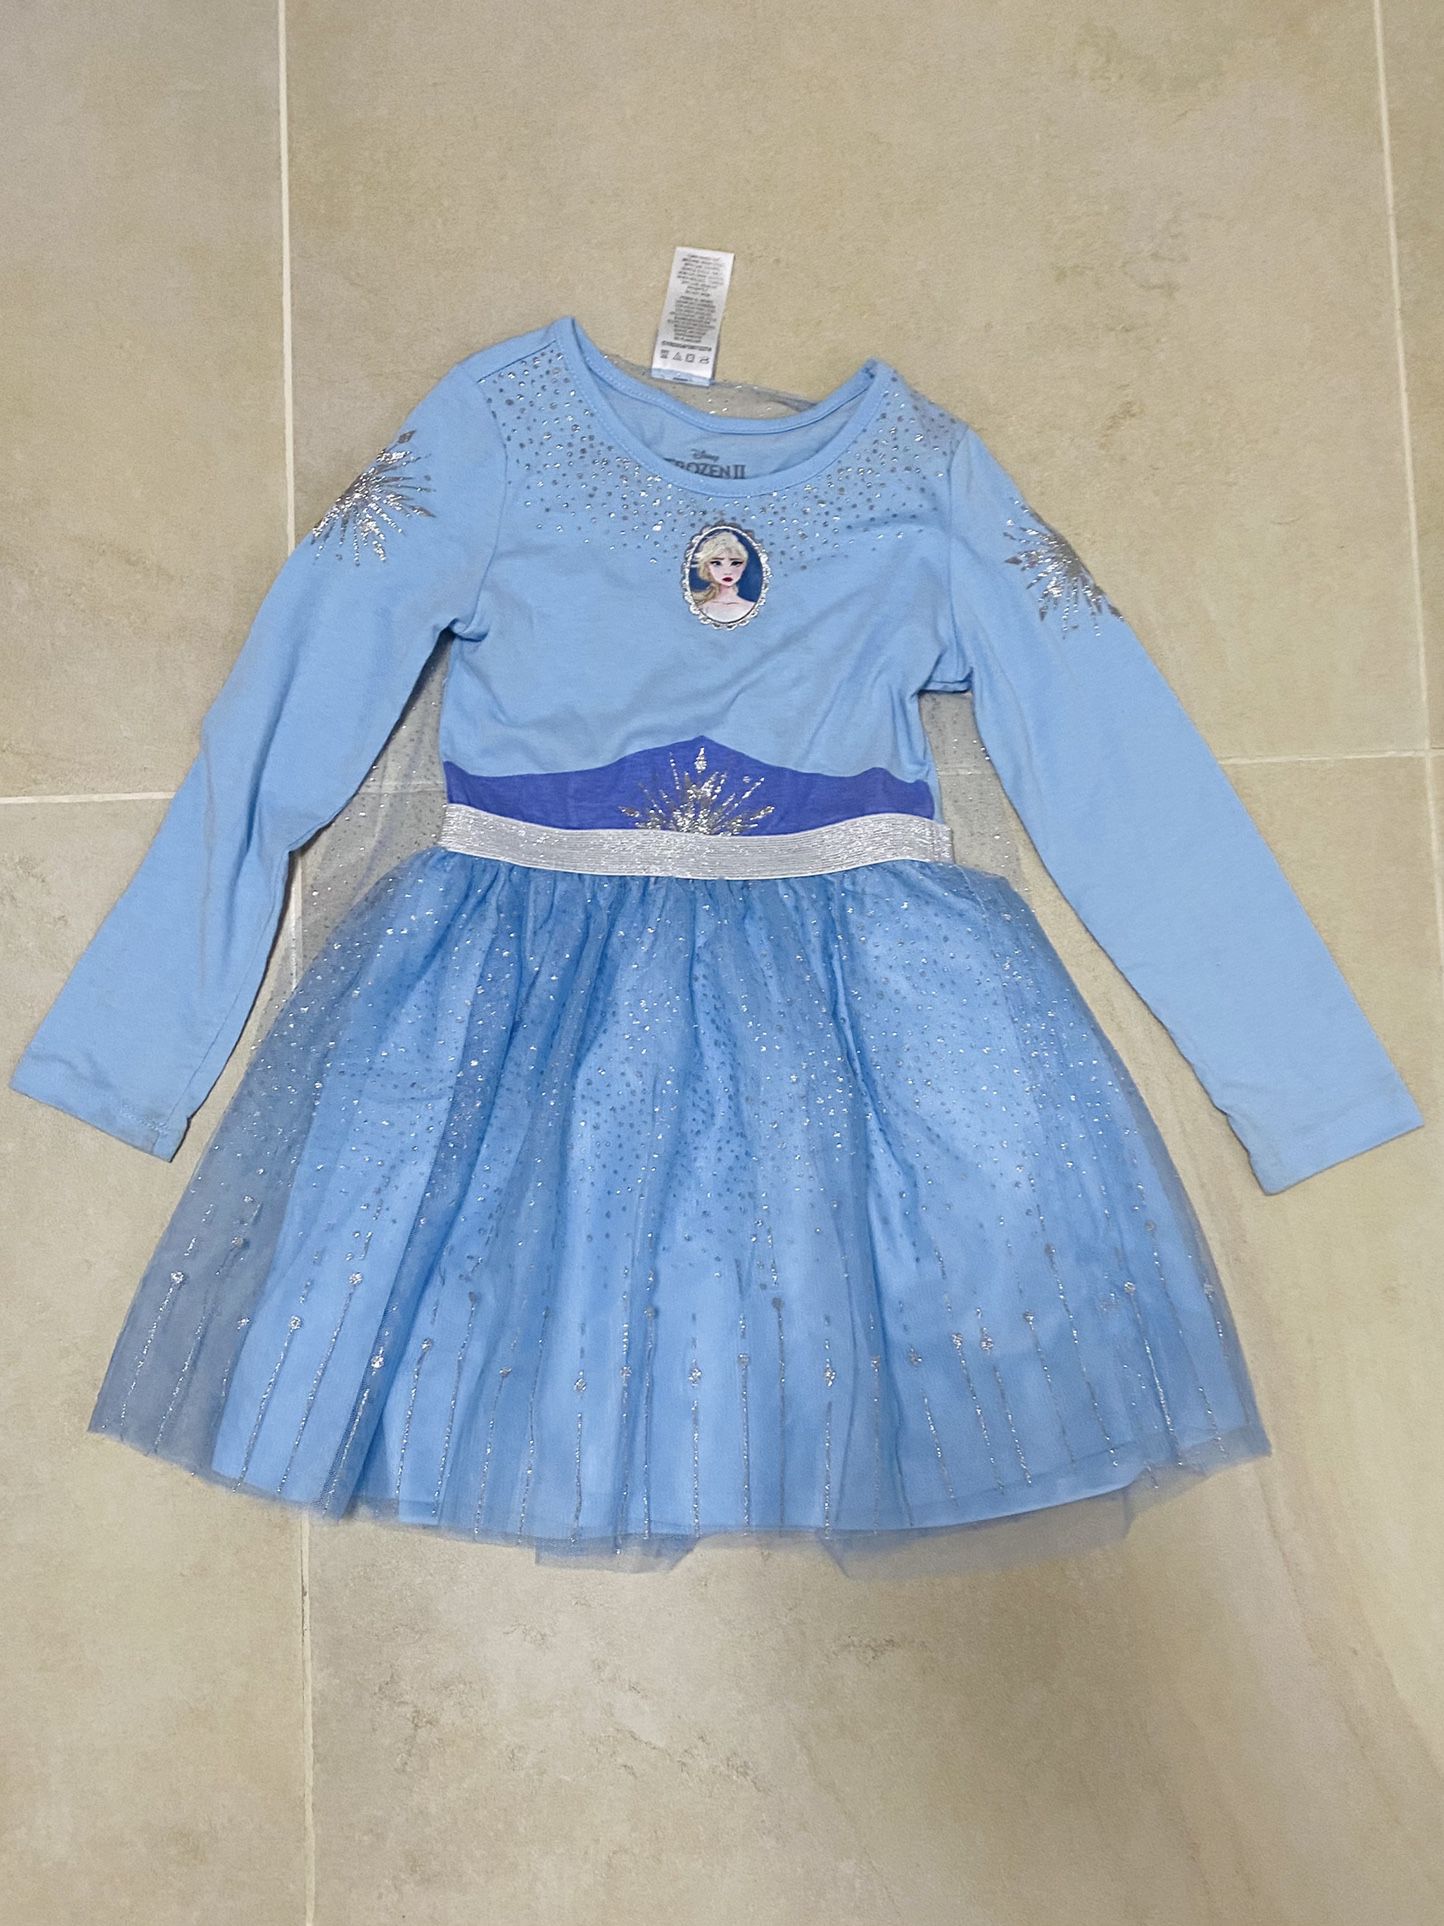 Frozen Elsa Dress Costume Size 6/6x 